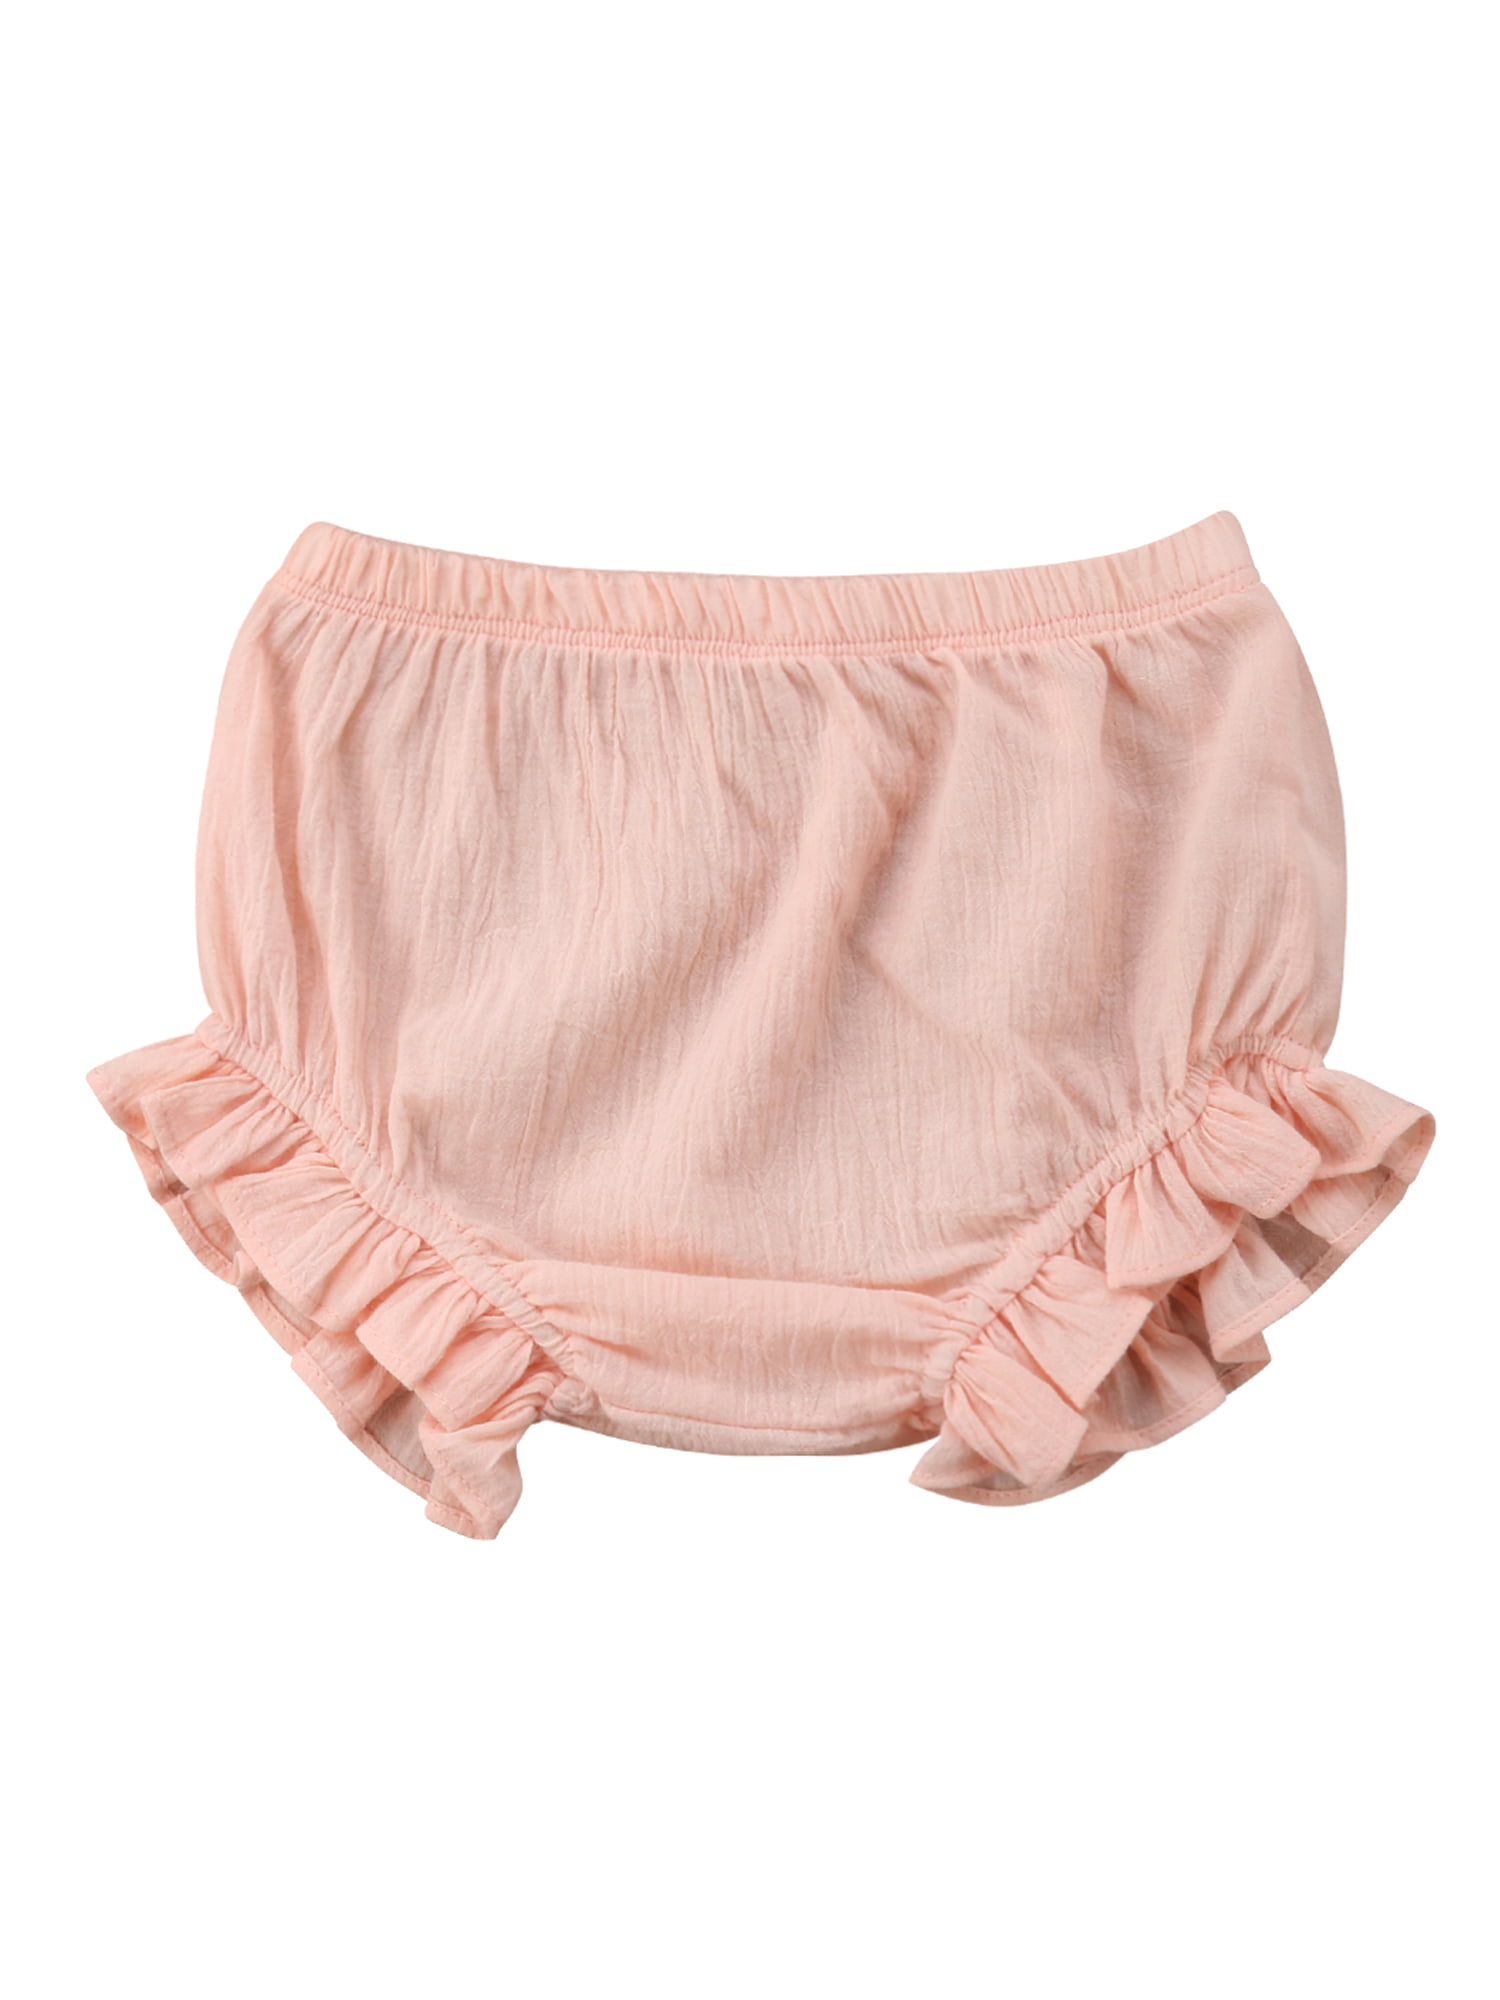 Lanhui Baby Ruffle Bloomer Nappy Infant Girl Bowknot Underwear Panty Diaper